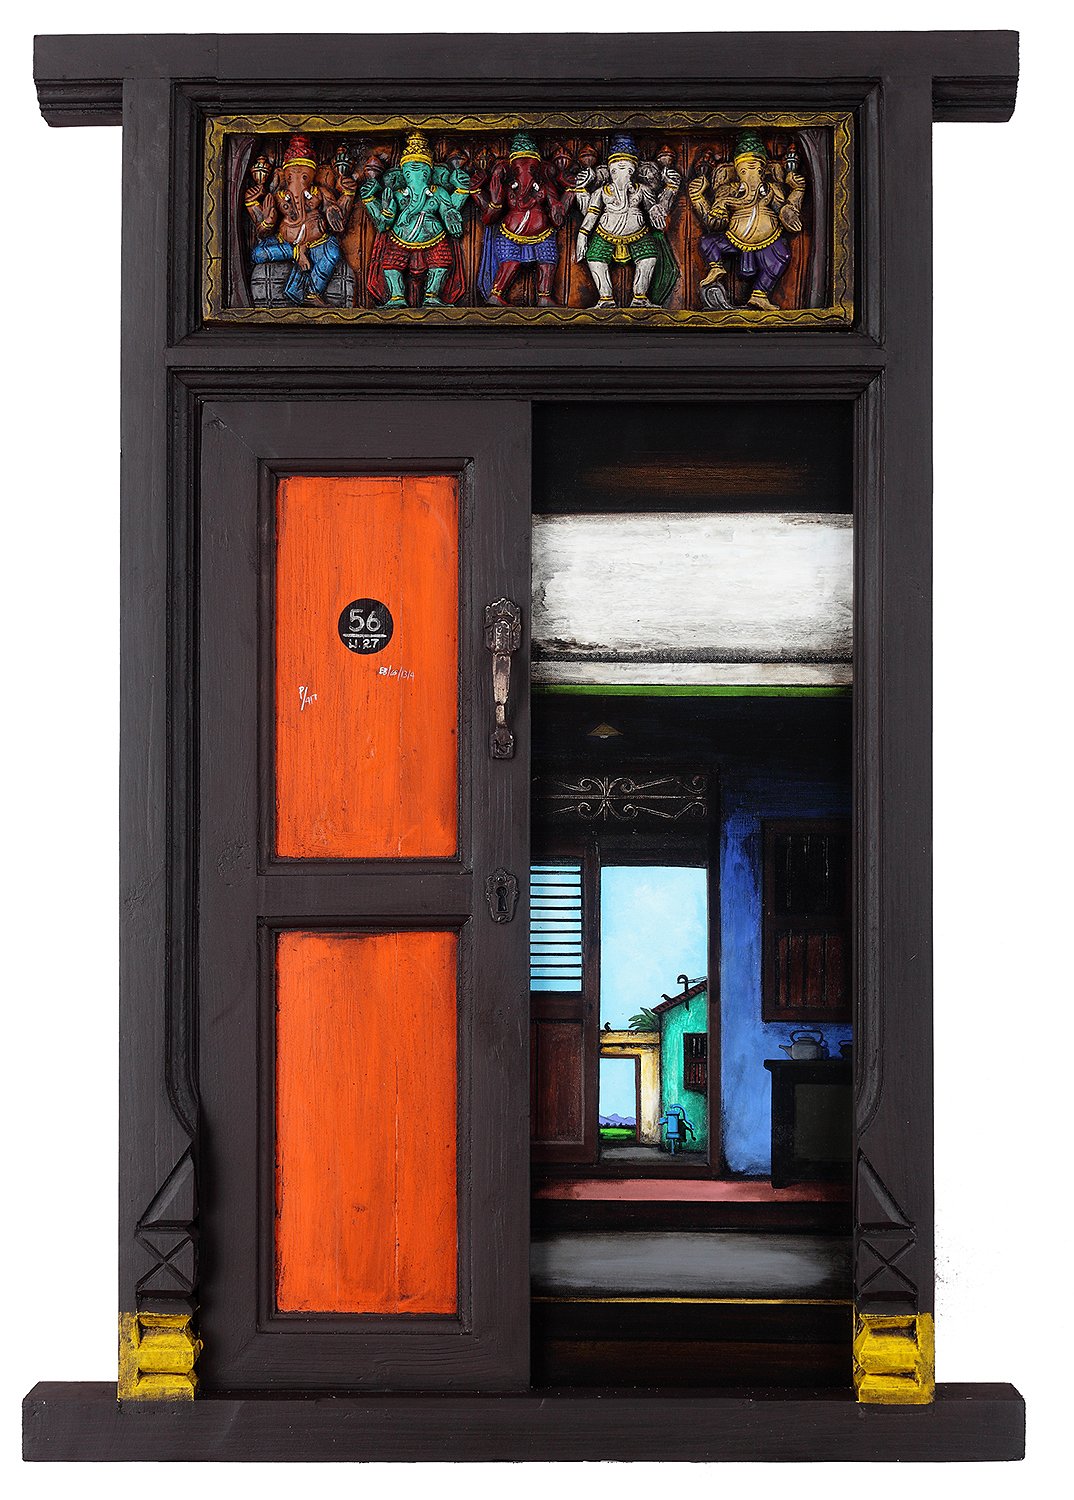 Door Series 18|K.R. Santhana Krishnan- Mixed Media on Wood, 2013, 39 x 27 inches